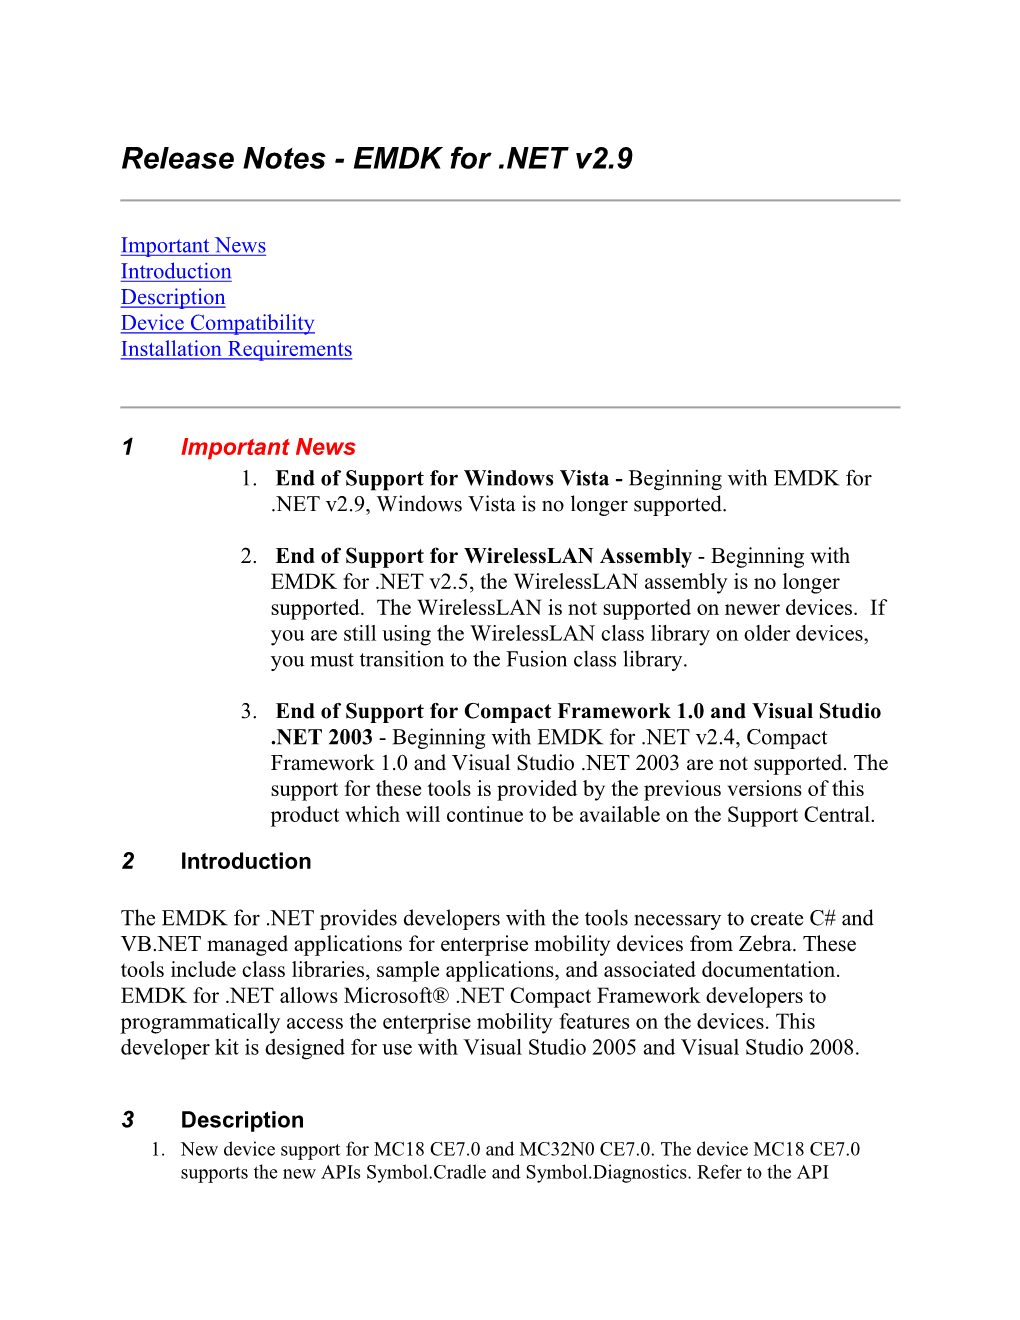 Release Notes - EMDK for .NET V2.9